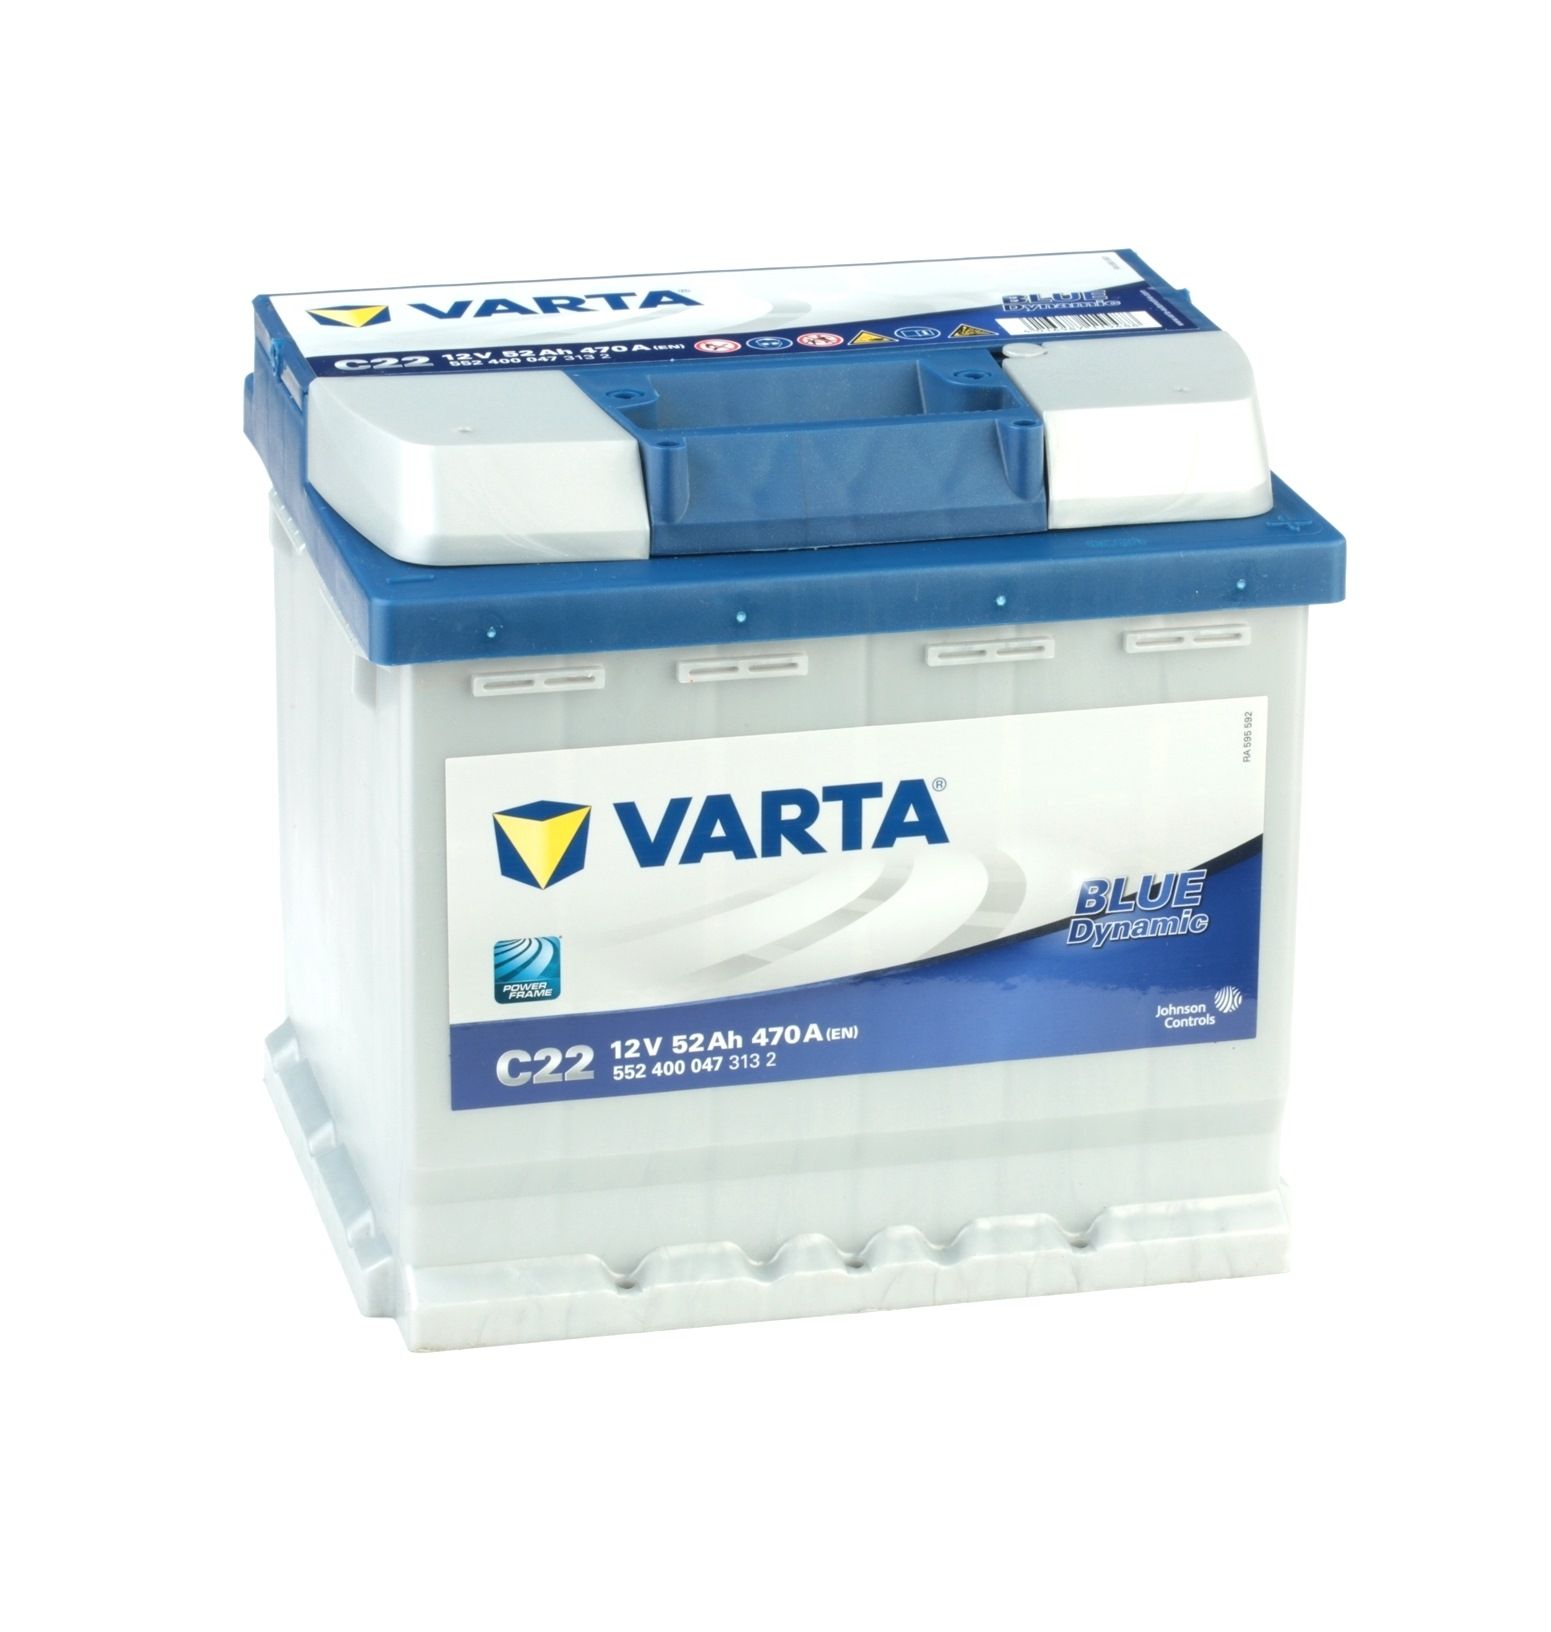 VARTA BLUE dynamic 5524000473132 Batería 12V 52Ah 470A B13 Bateria chumbo-ácido